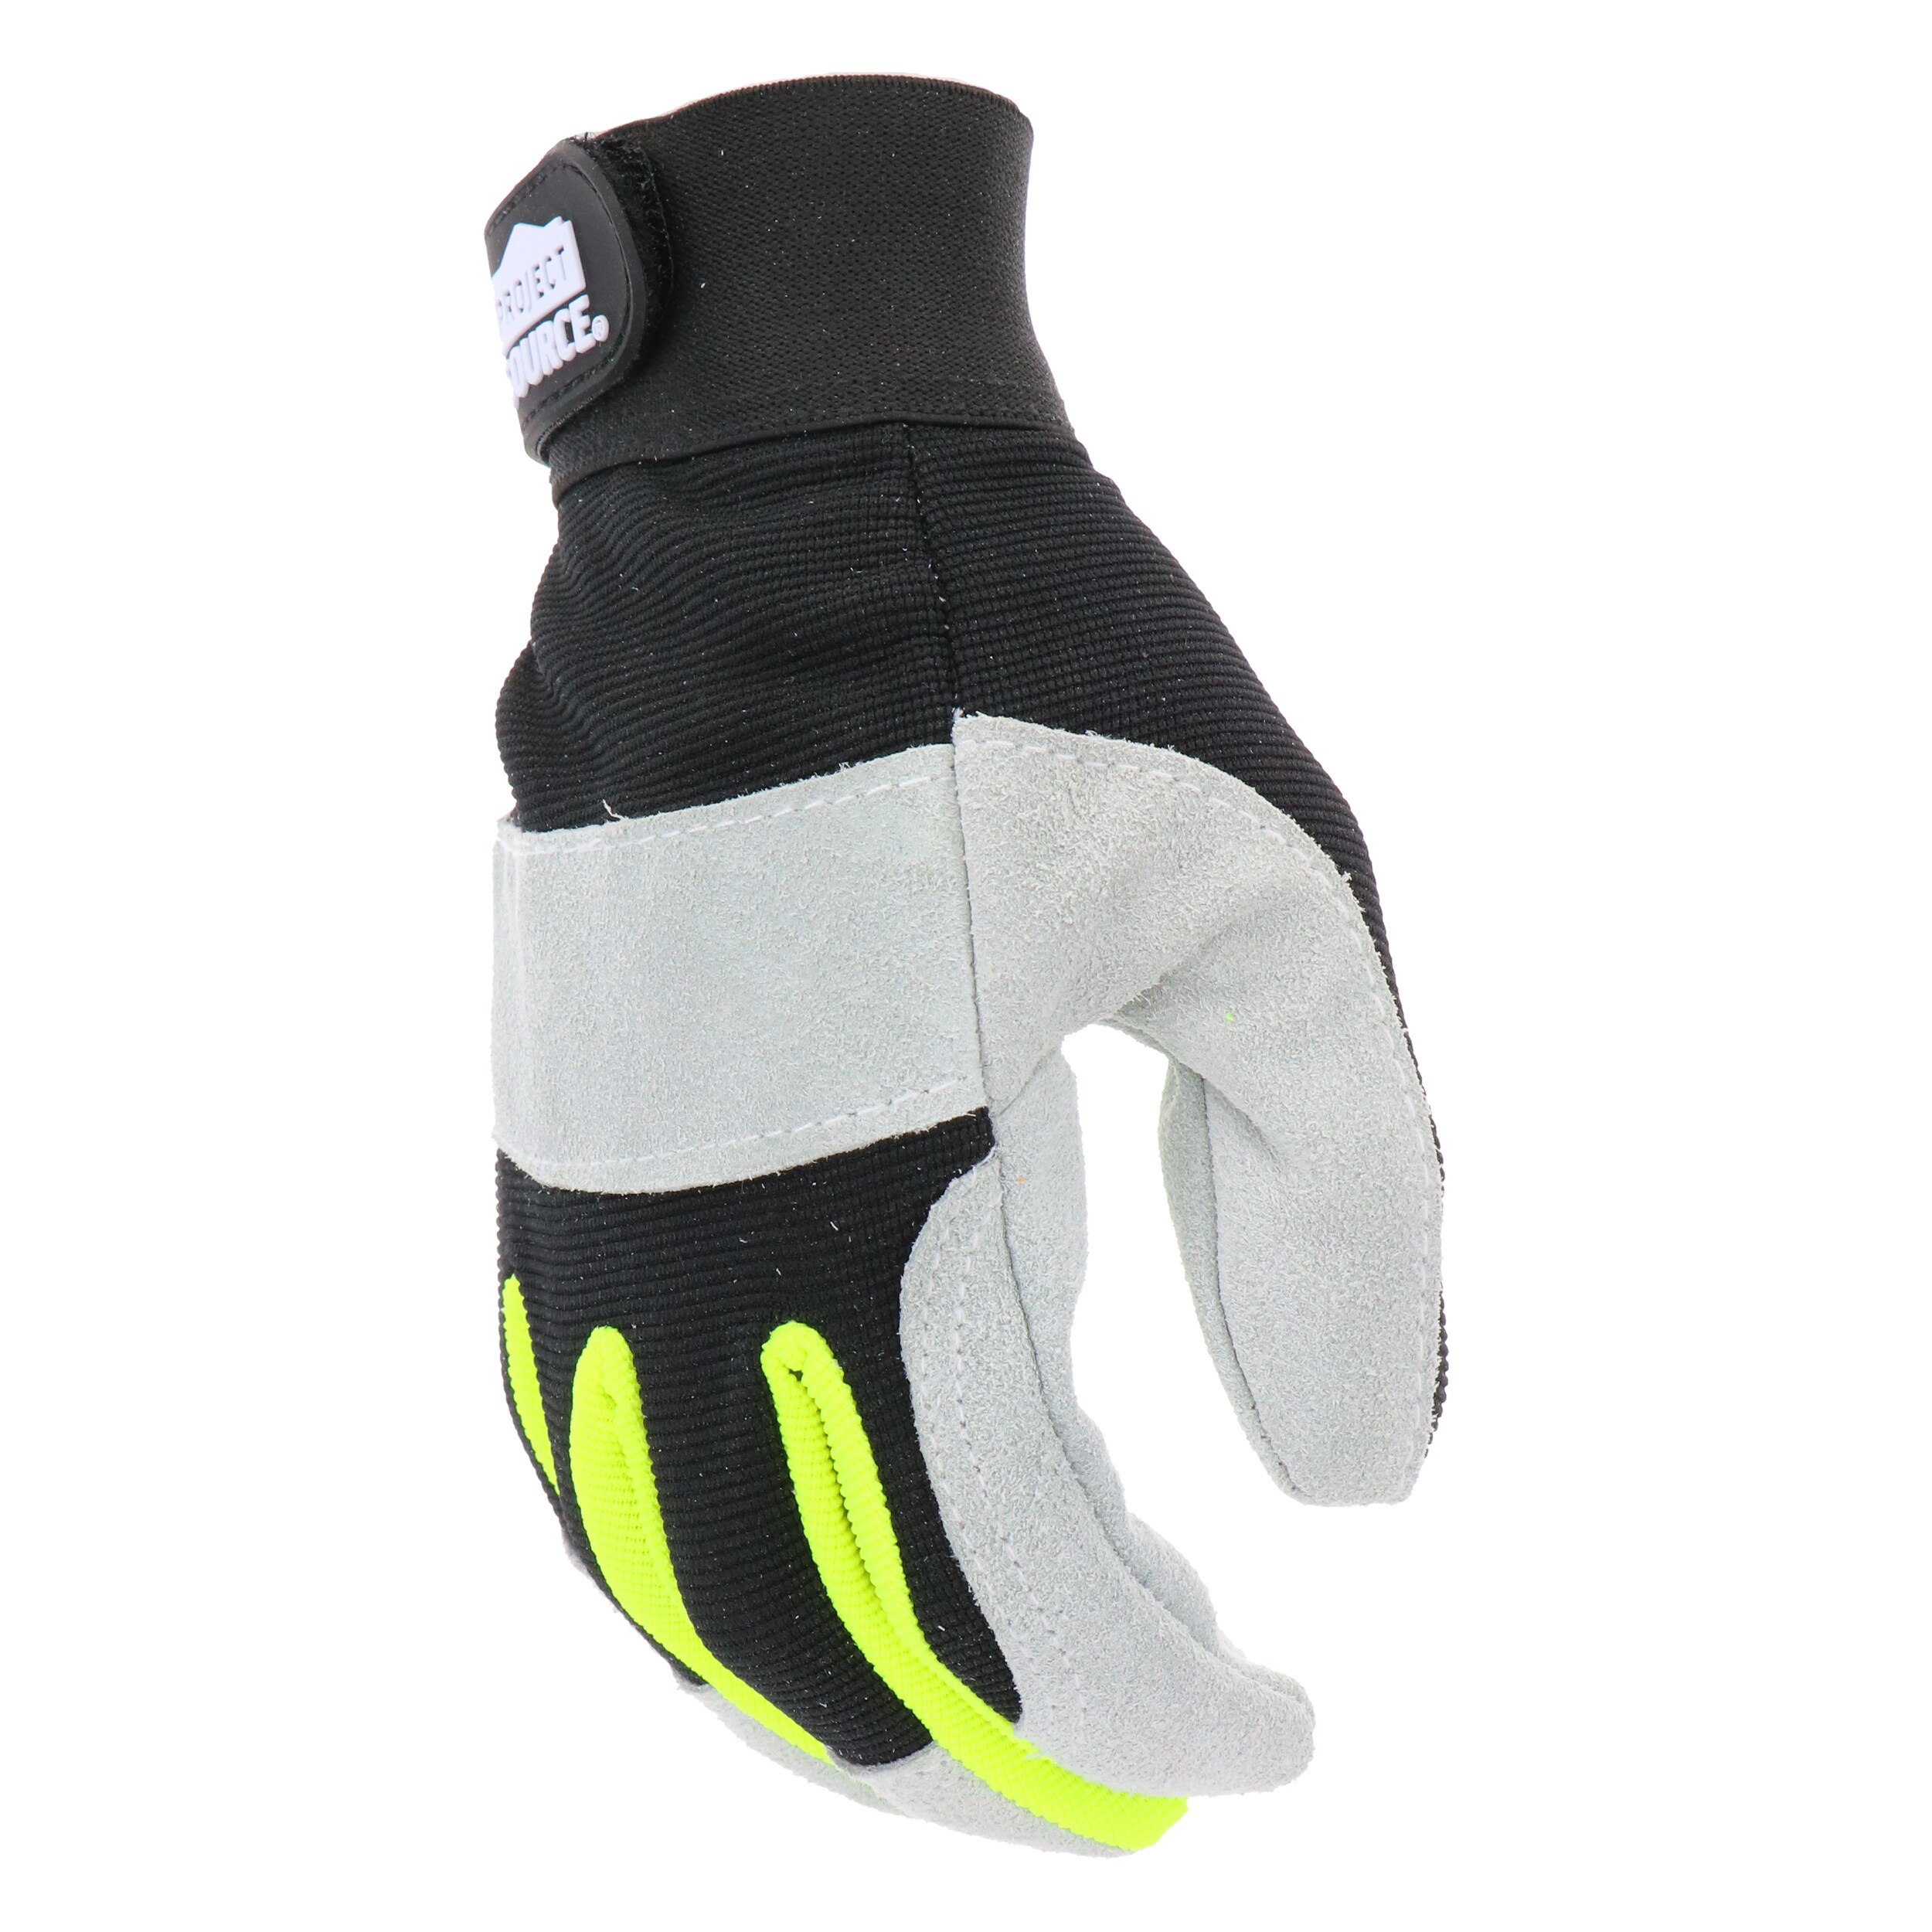 Hosa Technology A/V Work Gloves (Medium) HGG-100-M B&H Photo